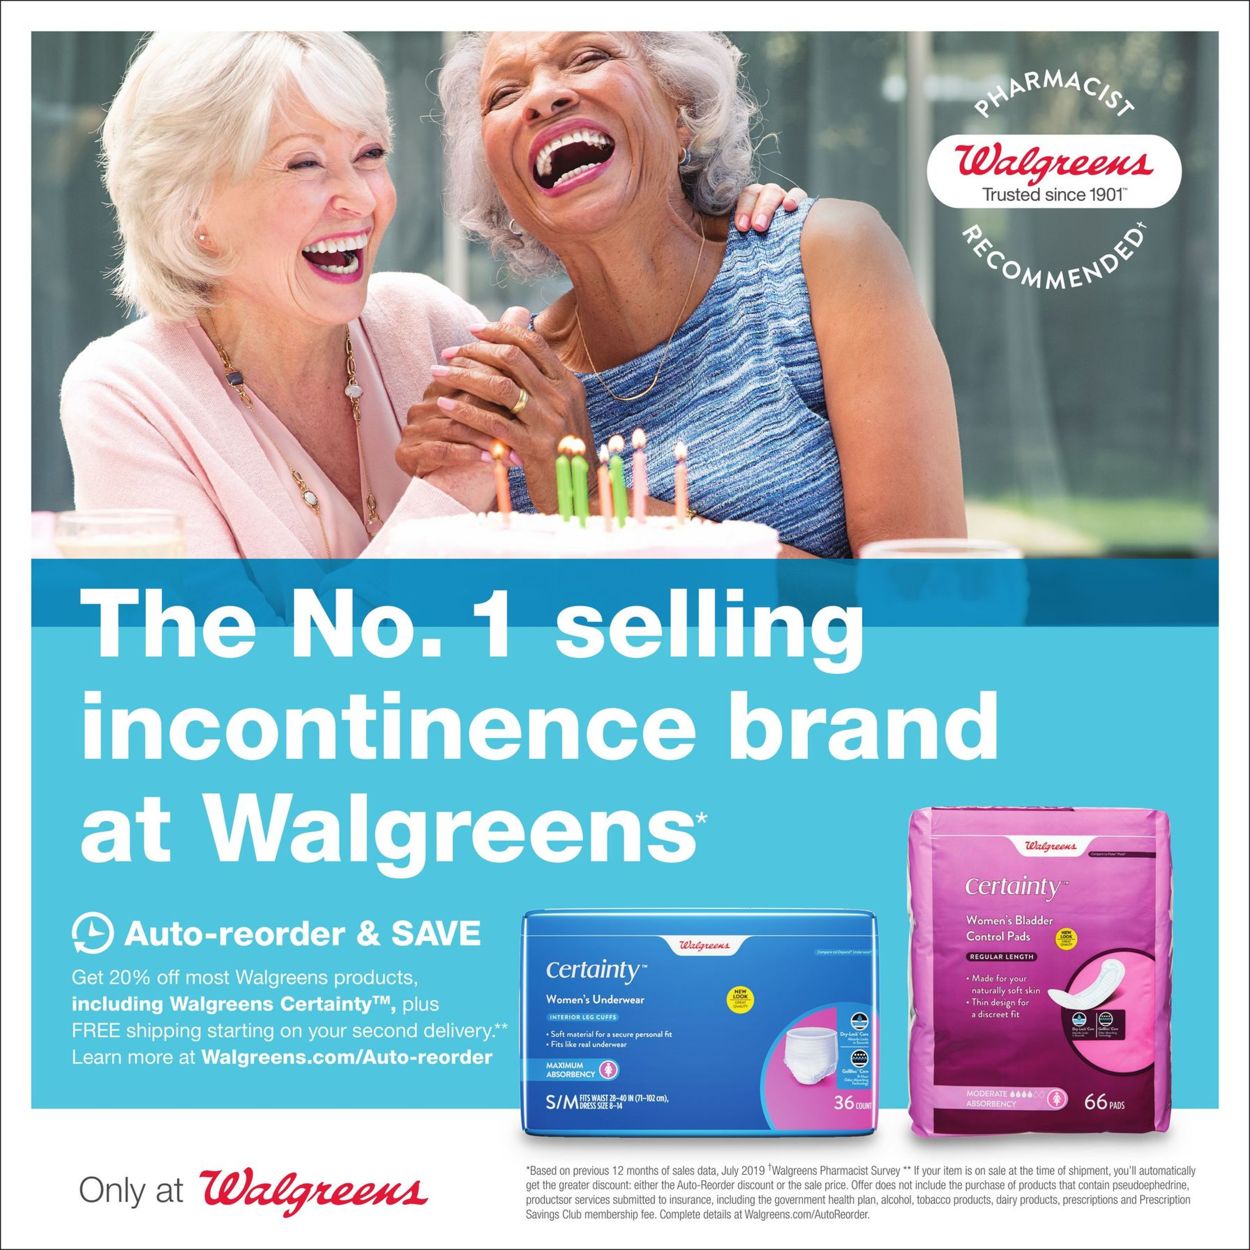 Catalogue Walgreens from 04/05/2020